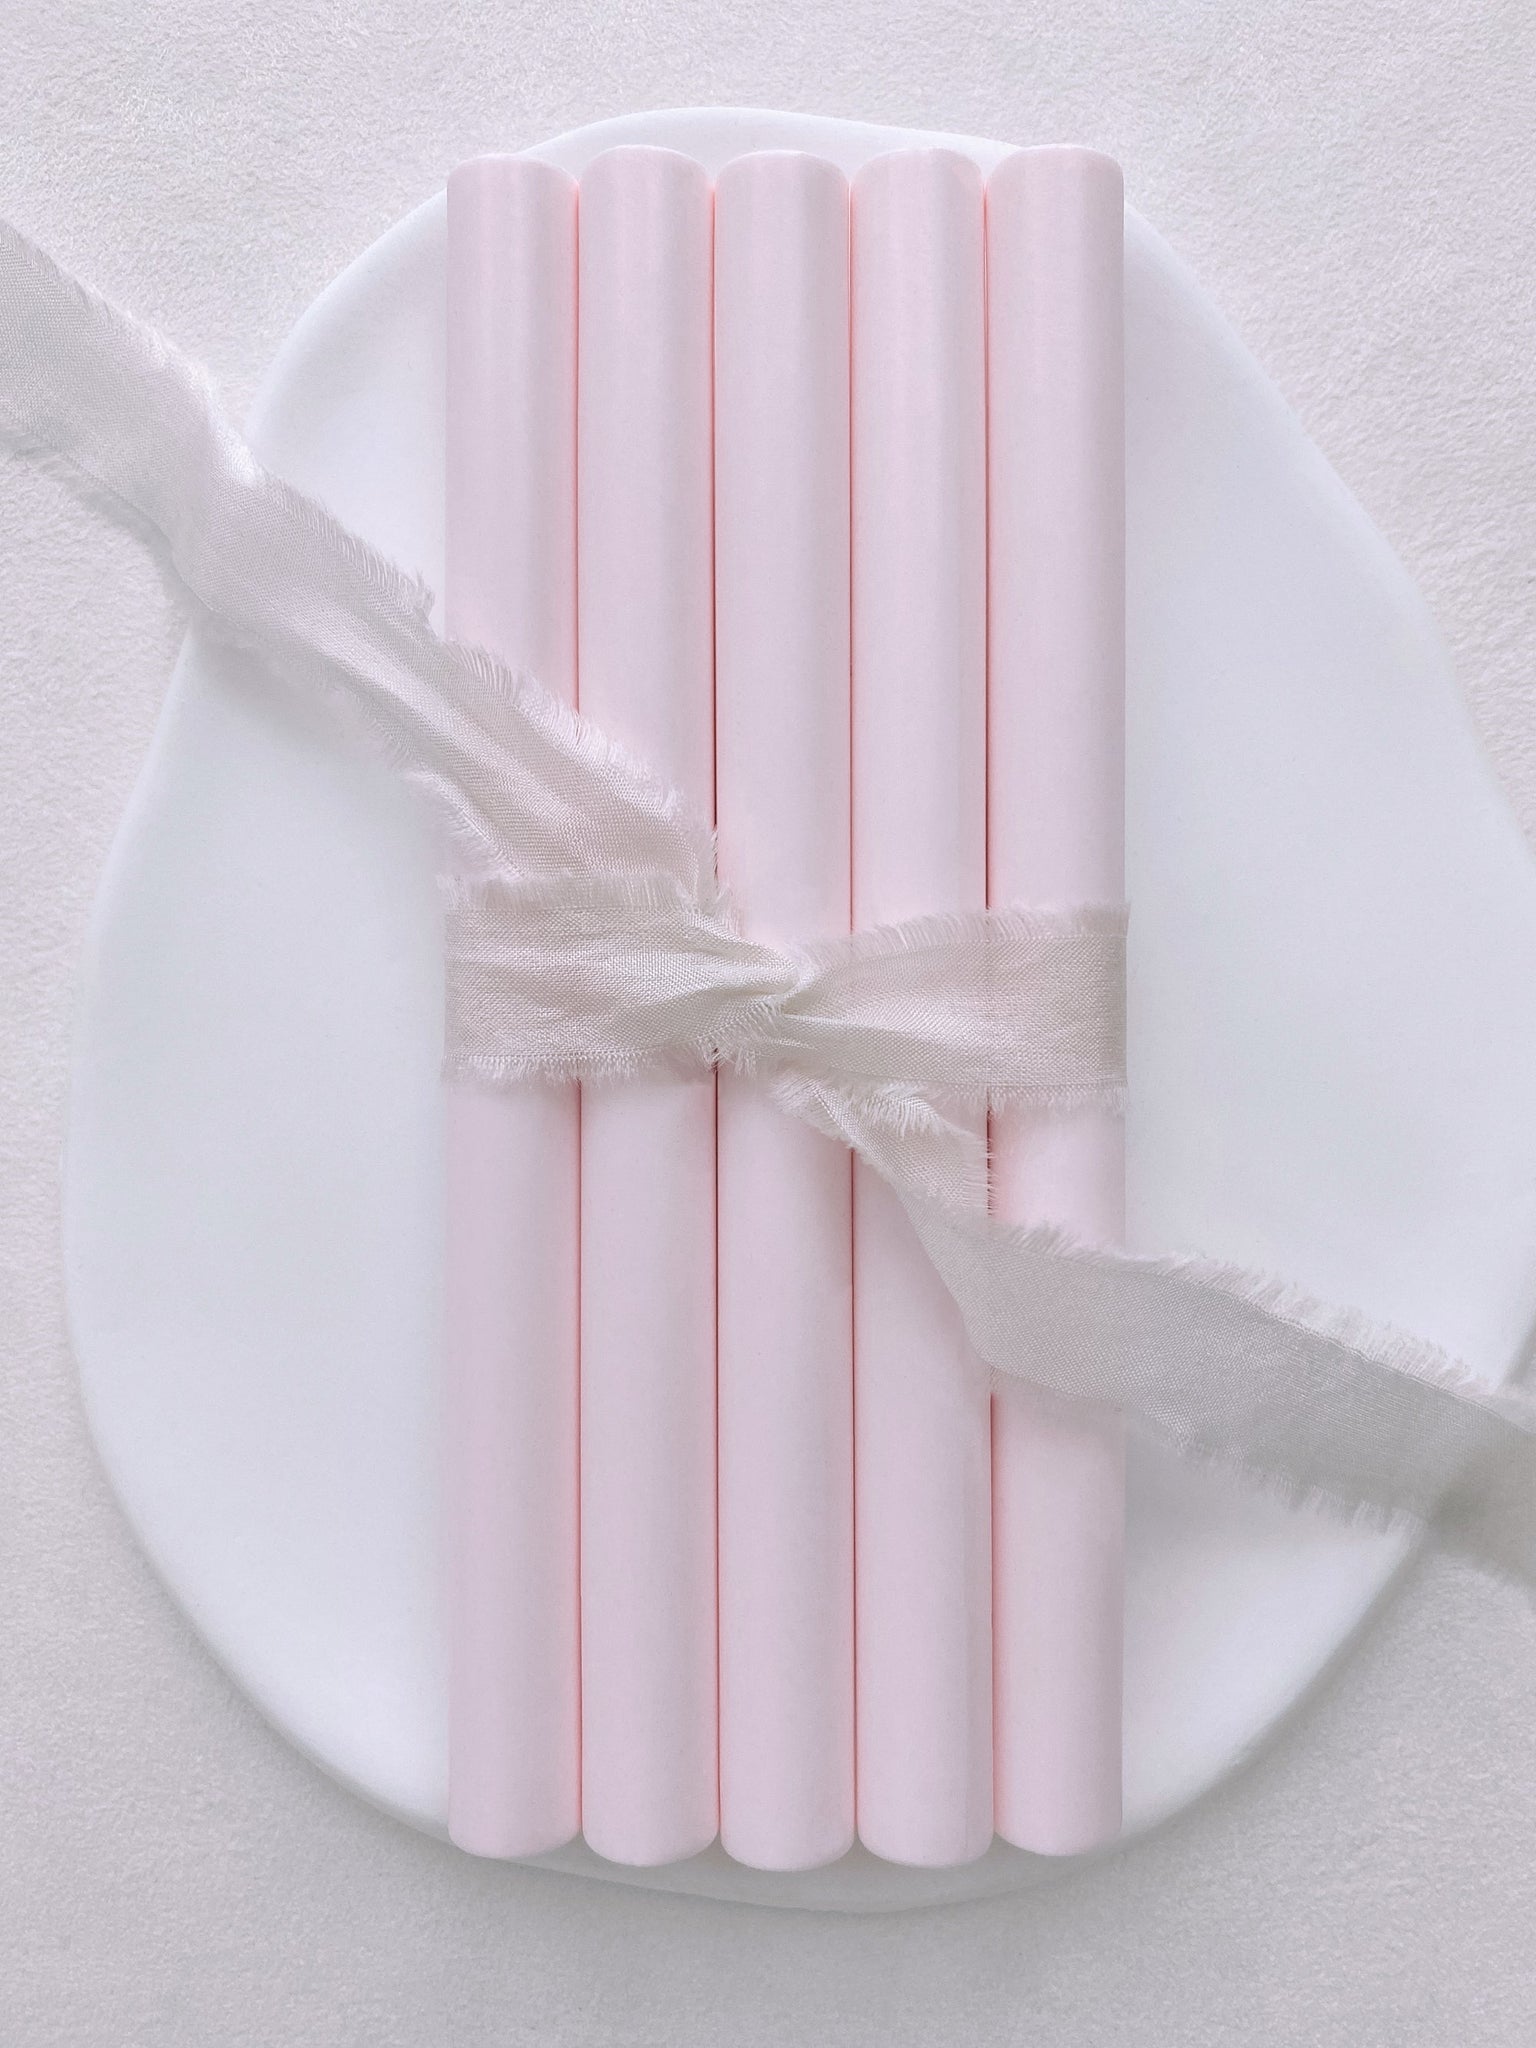 a set of 5 light blush color sealing wax sticks